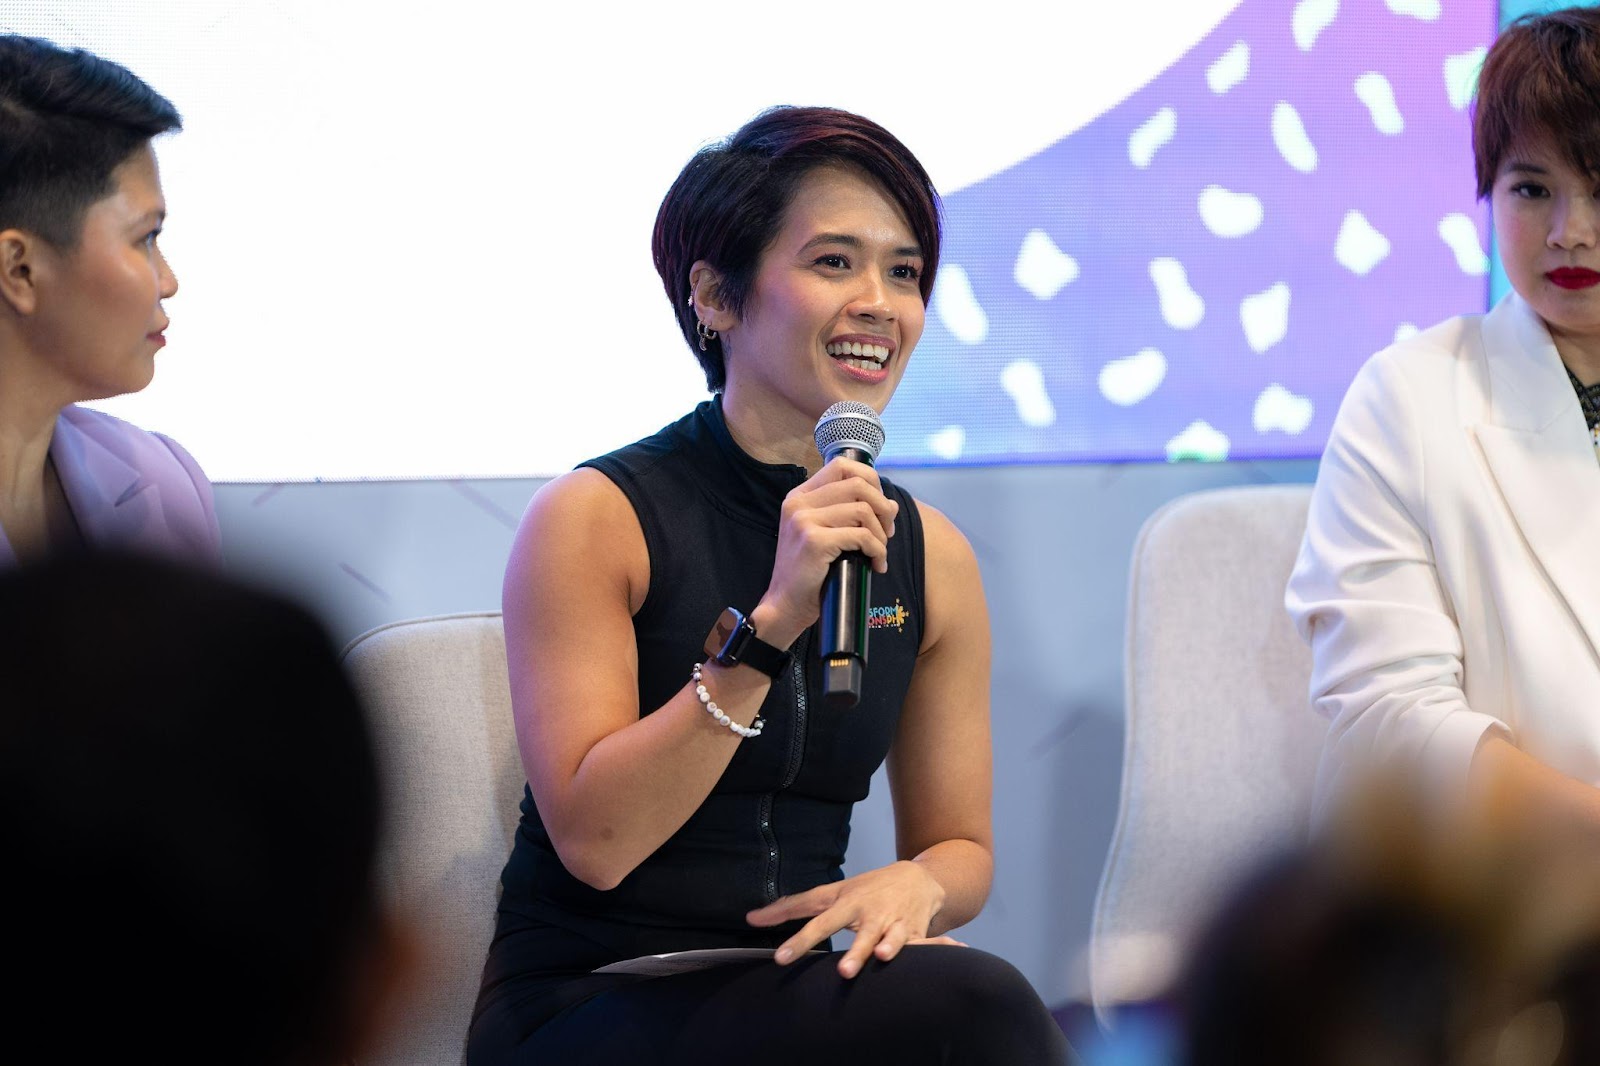 Inspiring Filipina YouTube creators break barriers online and beyond